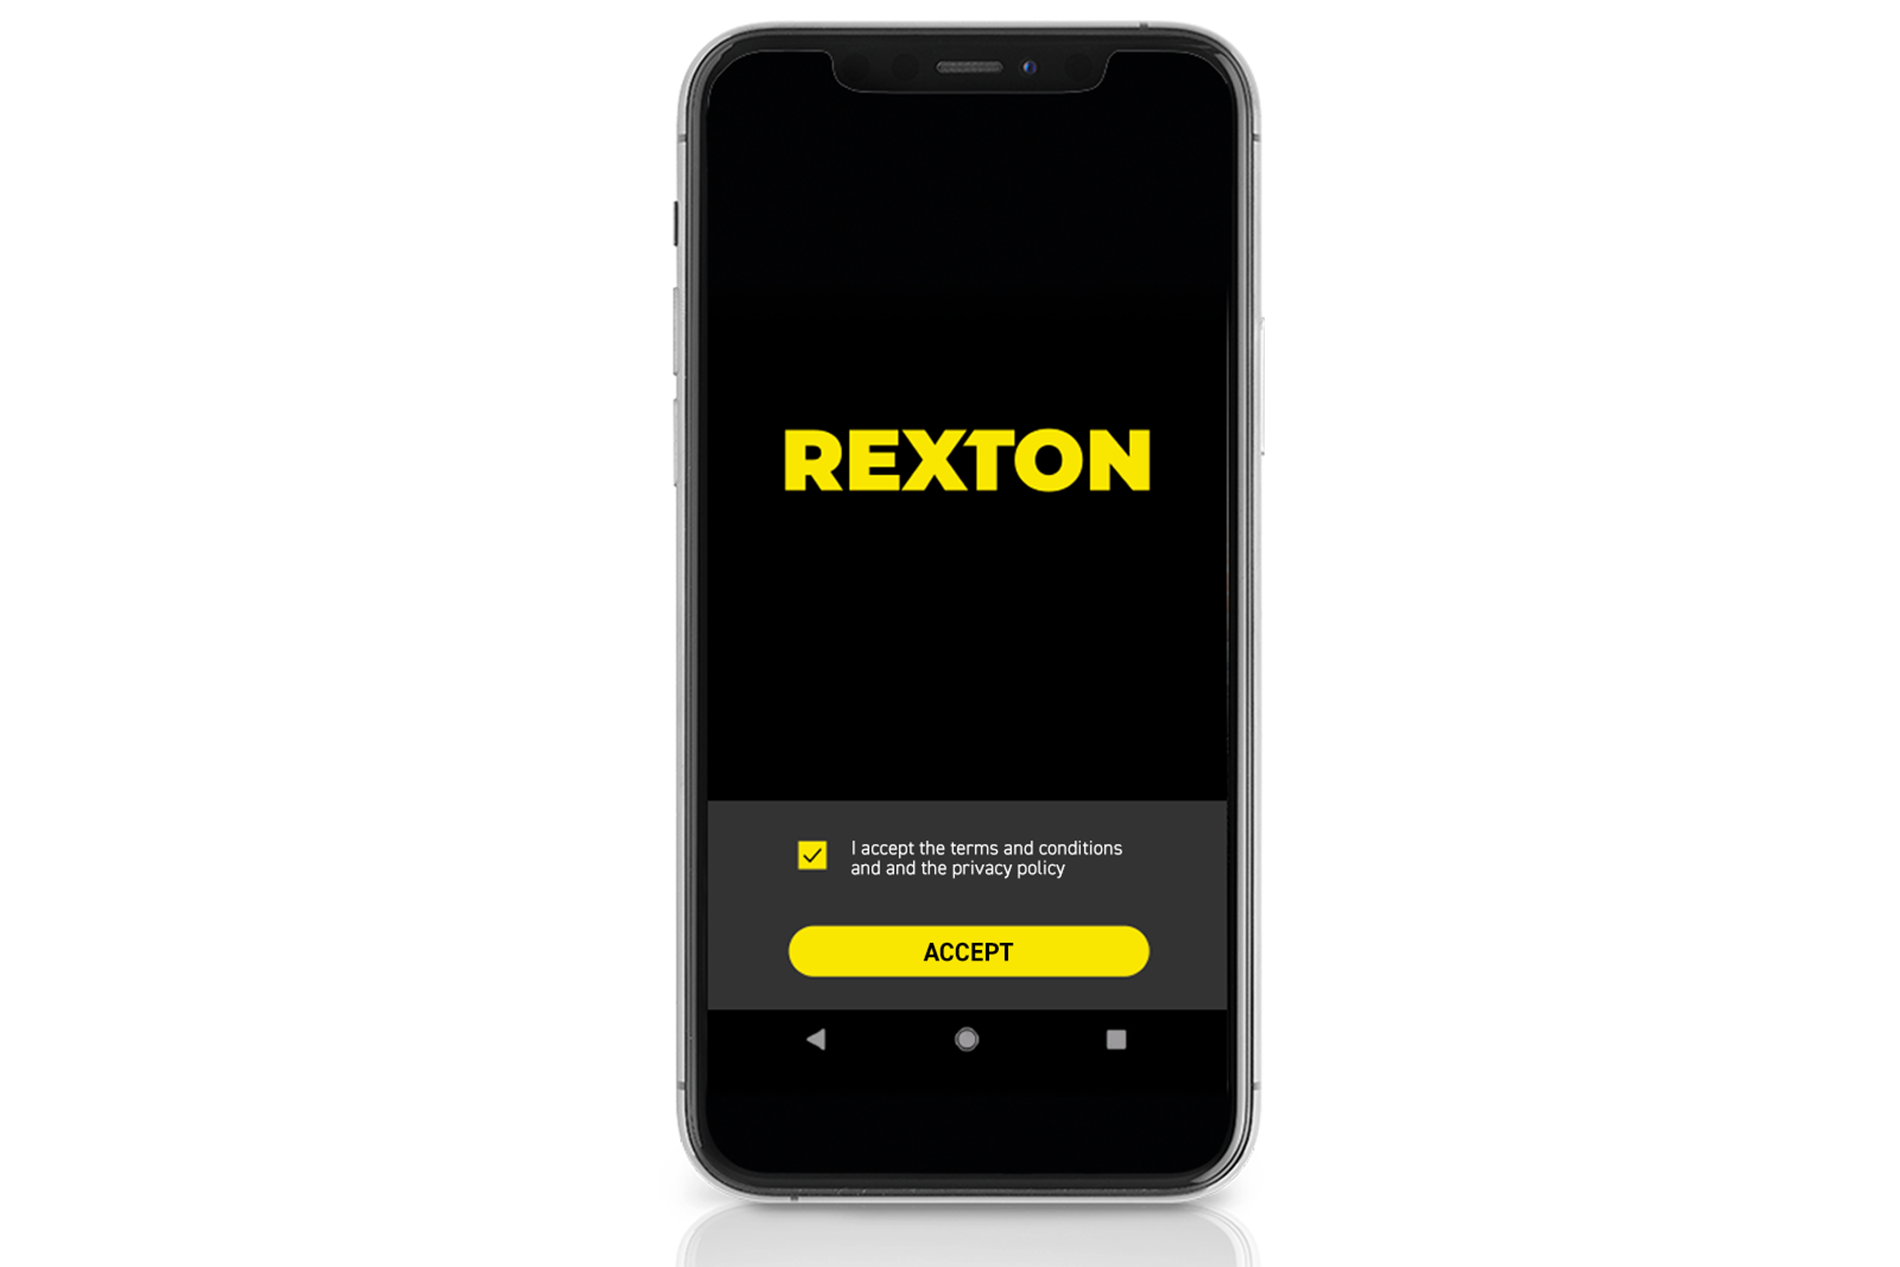 Rexton-App_1600x1067